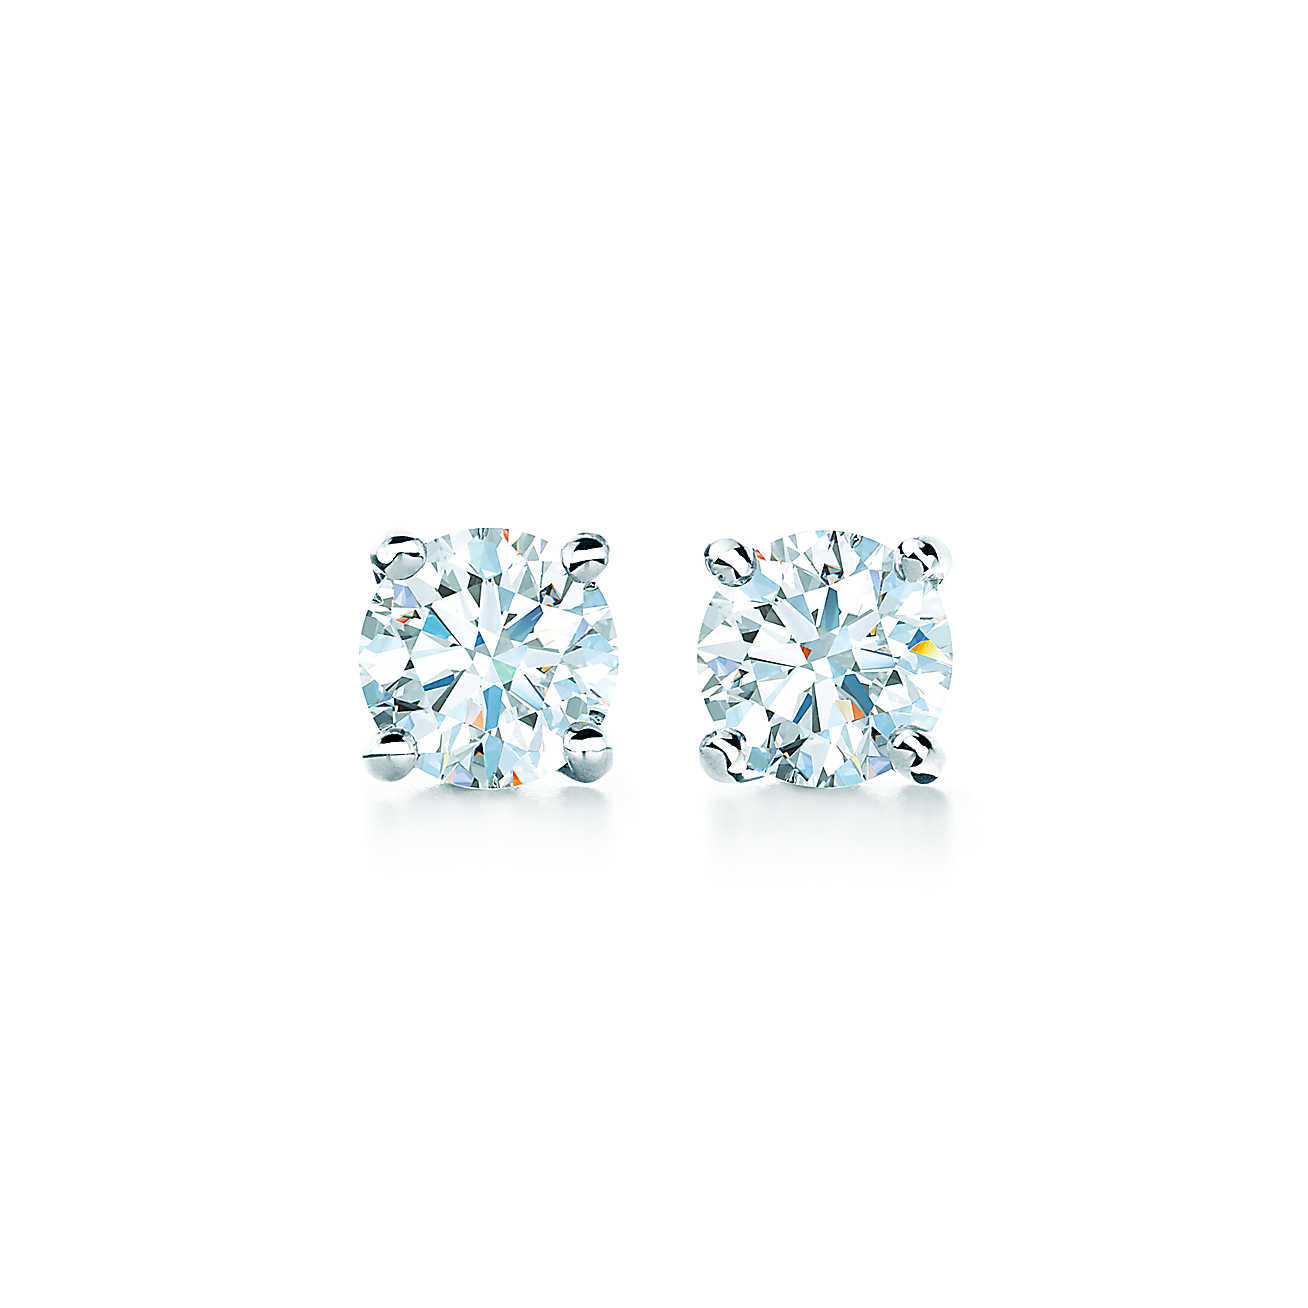 Tiffany Diamond Earrings
 Tiffany solitaire diamond earrings in platinum